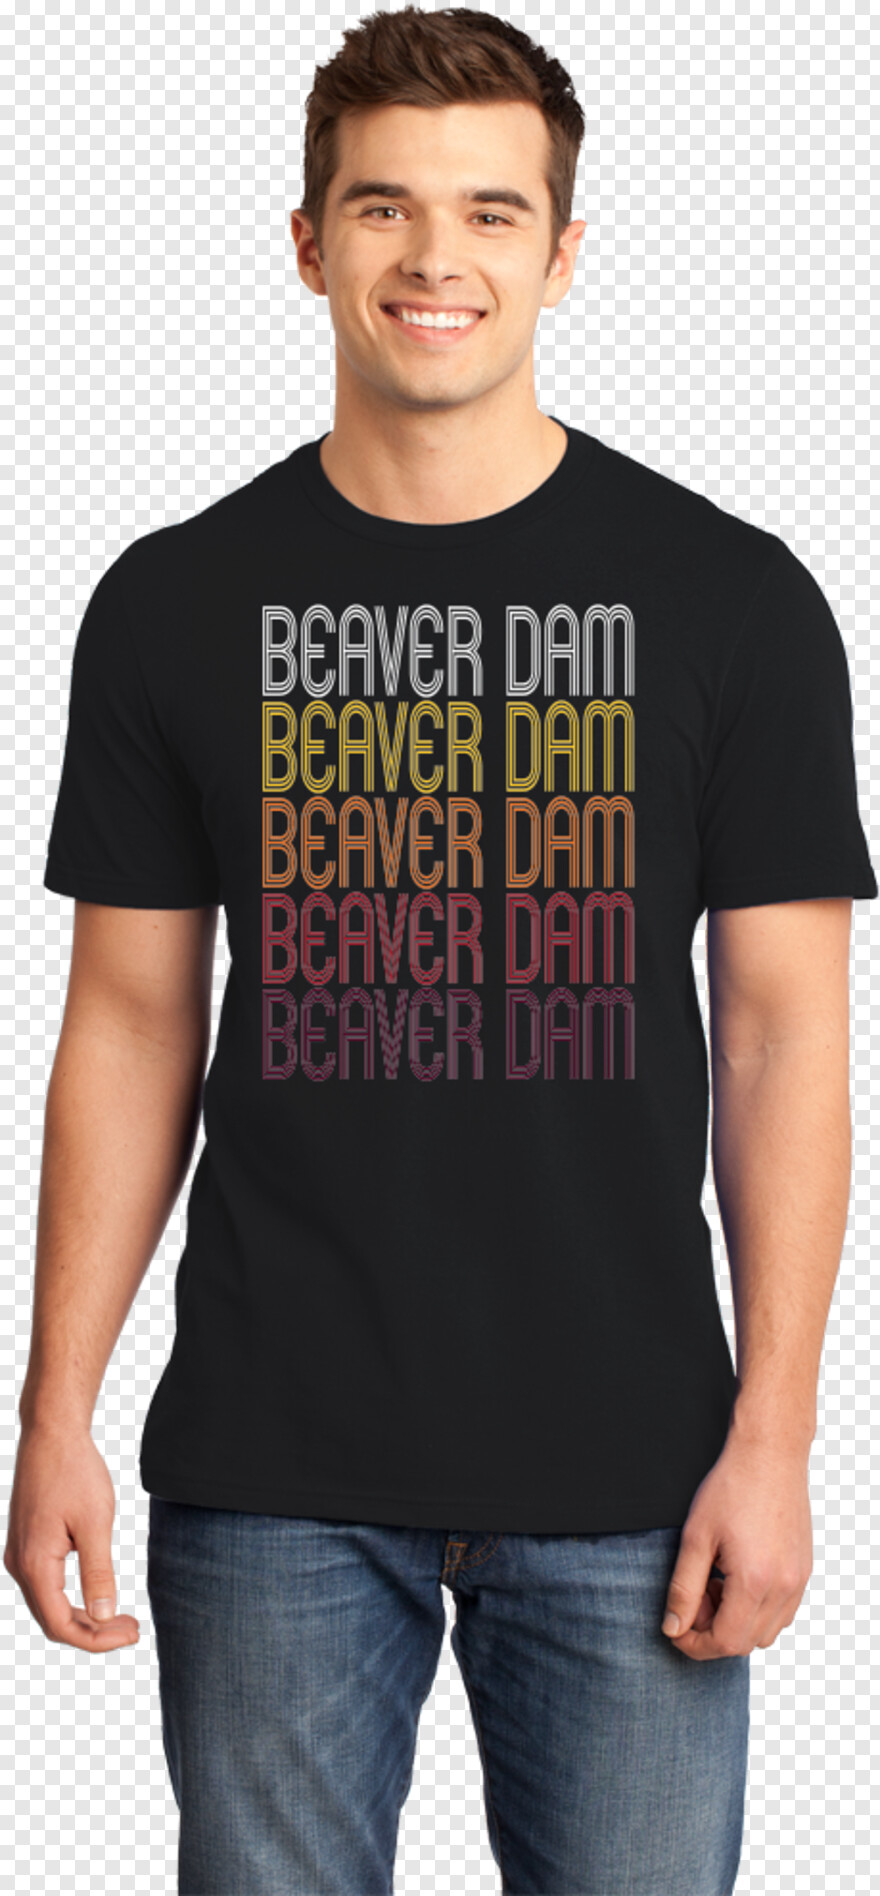 beaver # 383473